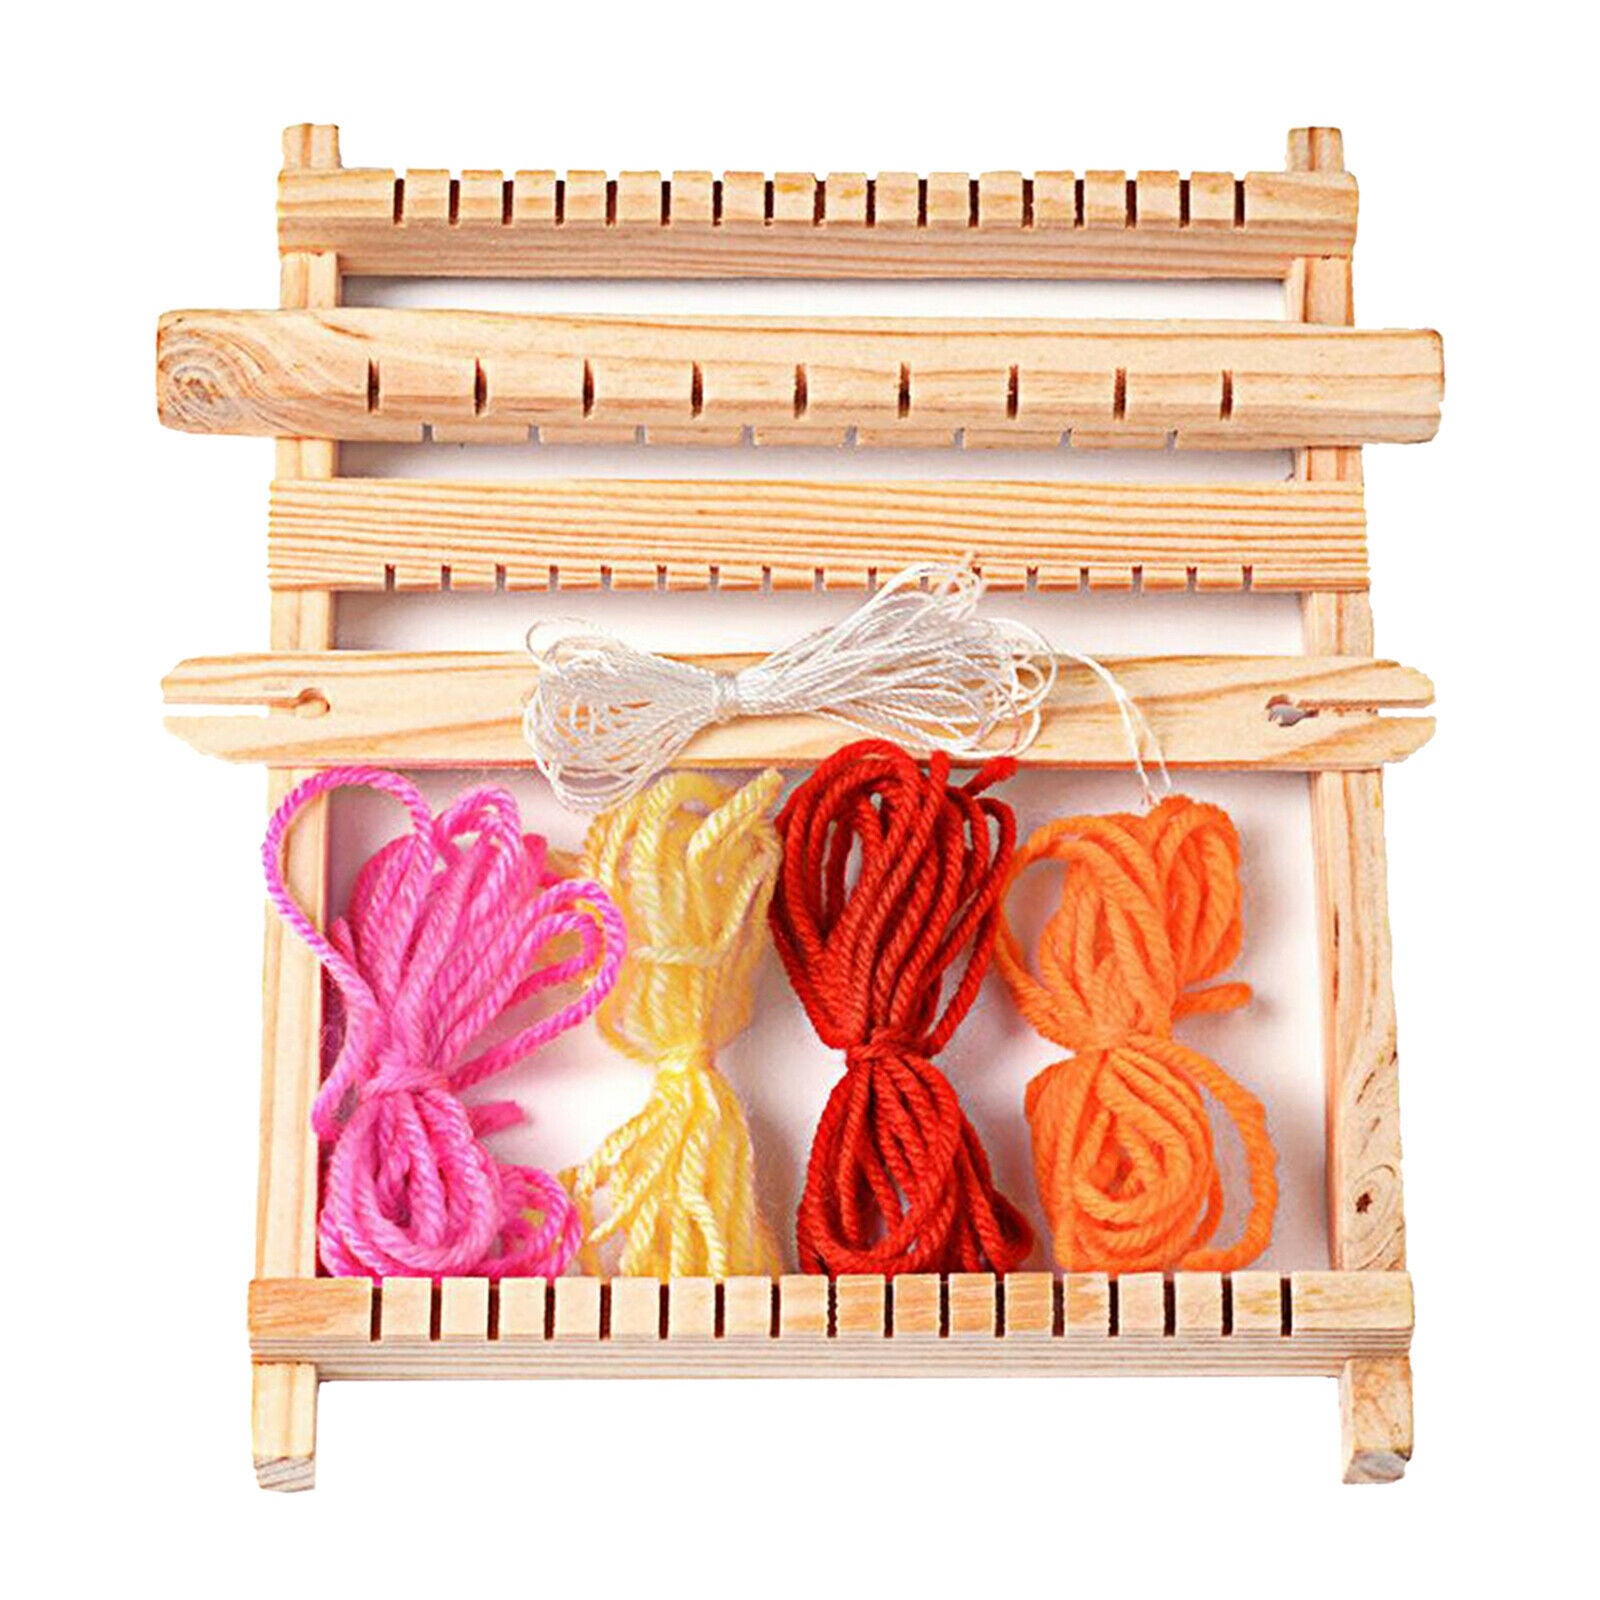 Wooden Weaving Loom DIY Hand Knitting Machine Shuttles Tool Set Education